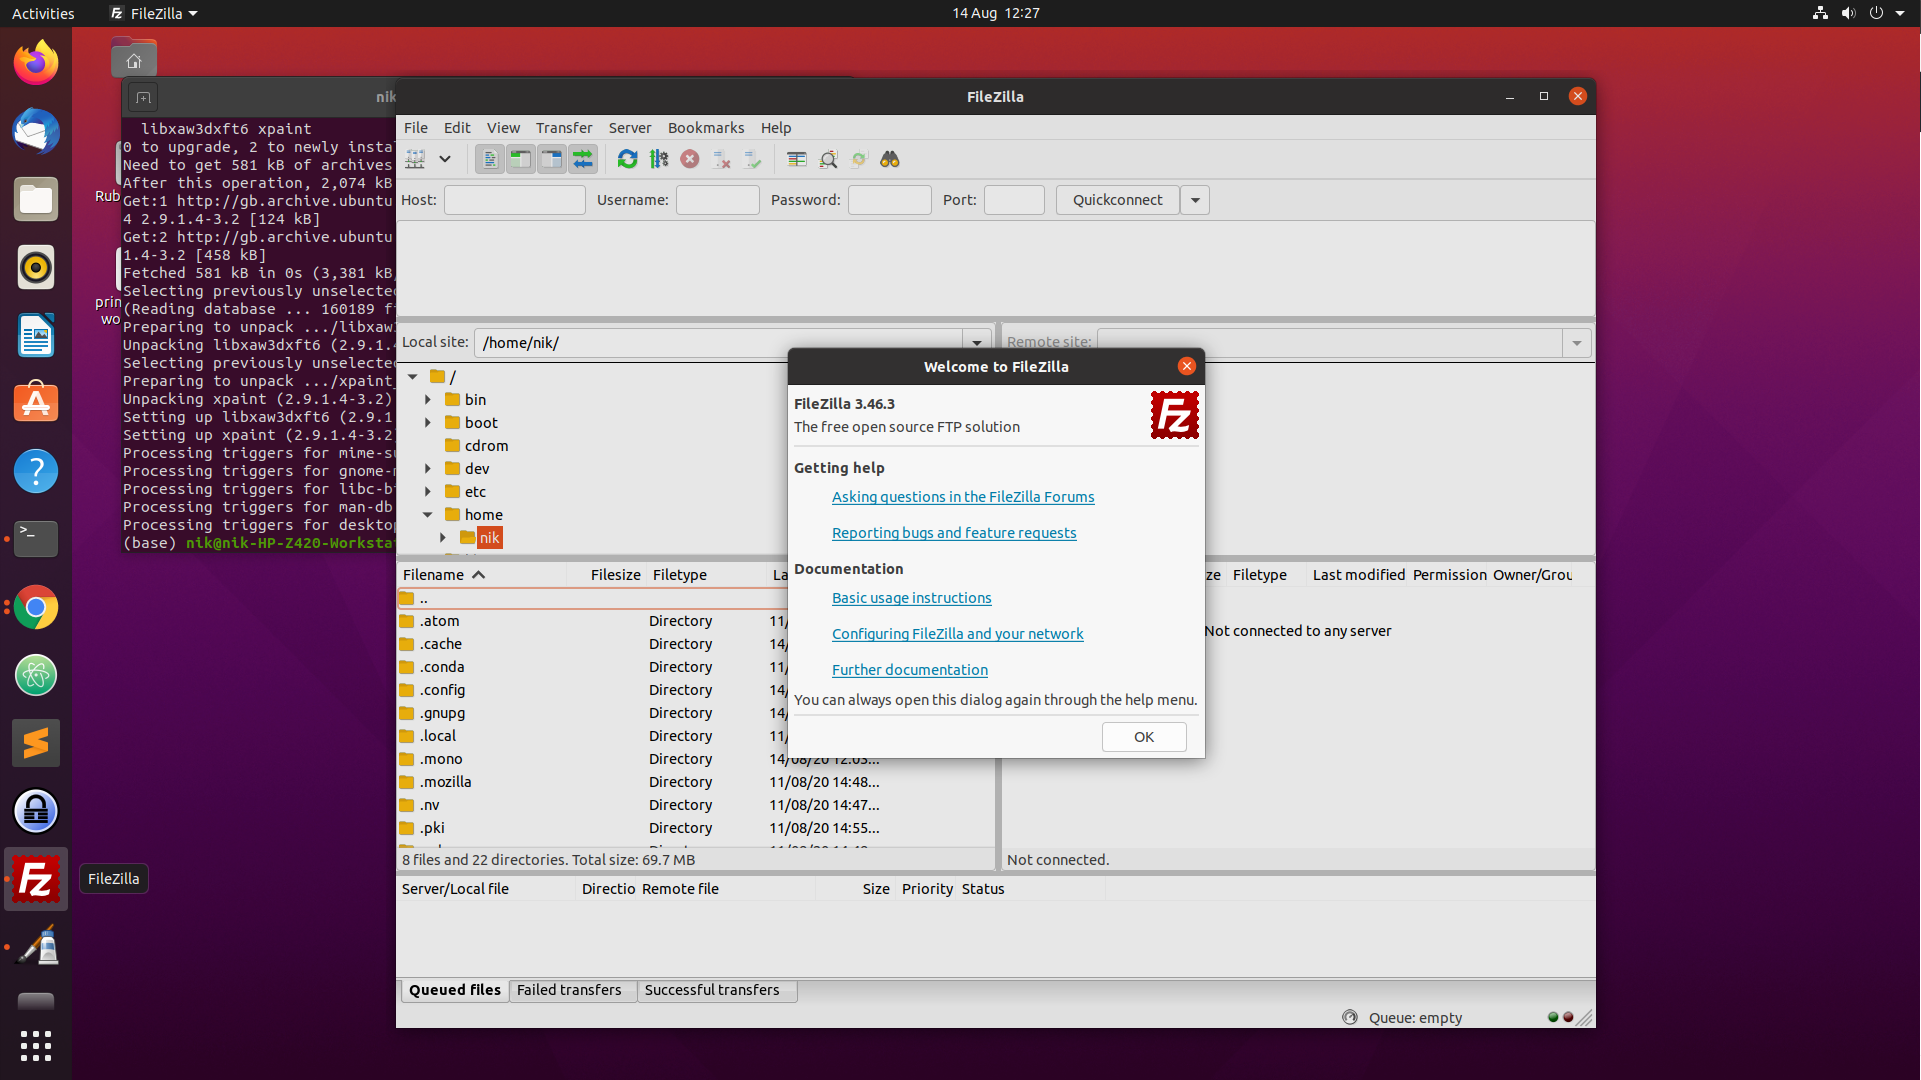 install filezilla on ubuntu 18.04